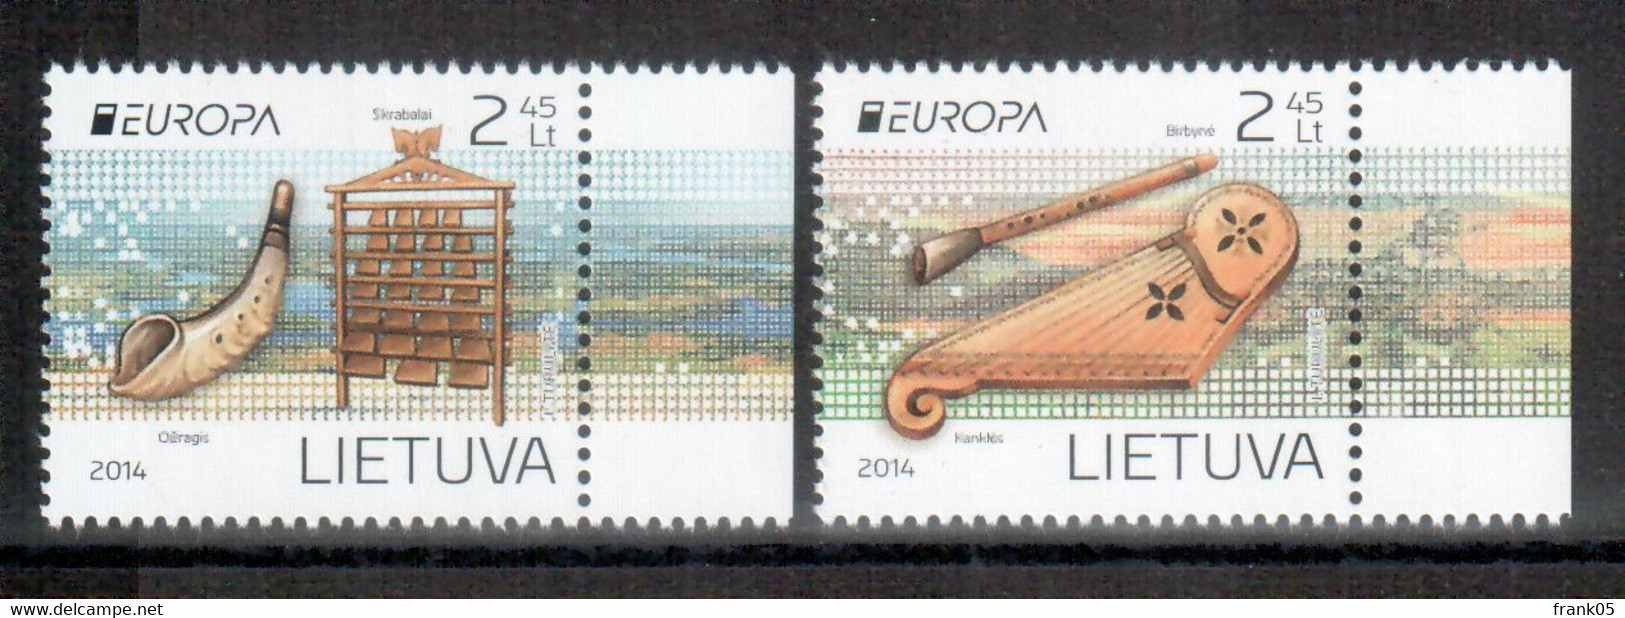 Litauen / Lithuania / Lituanie 2014 Satz/set EUROPA ** - 2014